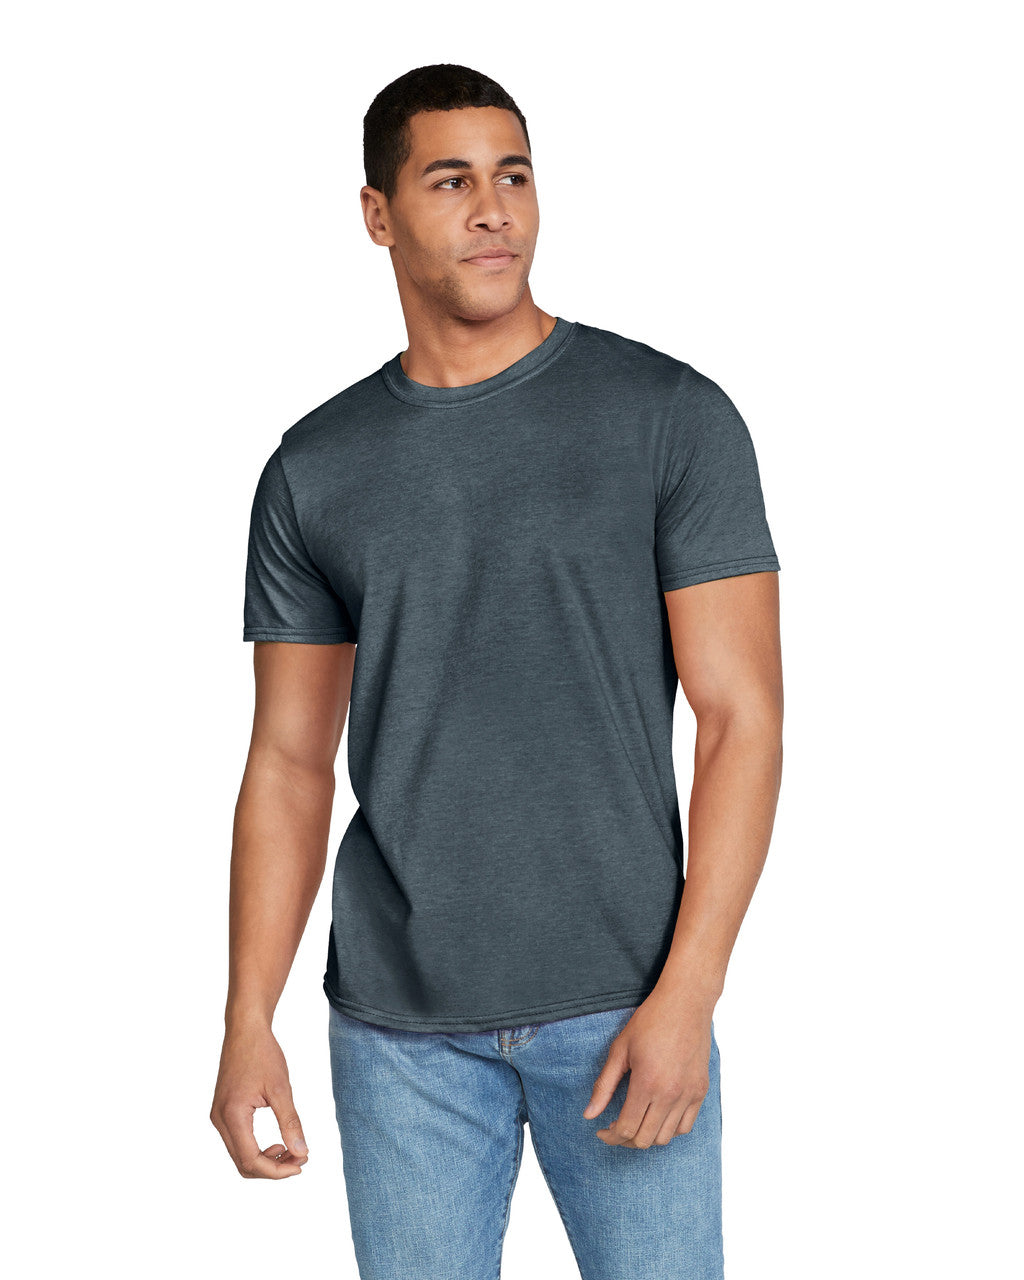 Gildan Softstyle Ringspun Cotton T-Shirt - Adult Men's & Kids Sizes 